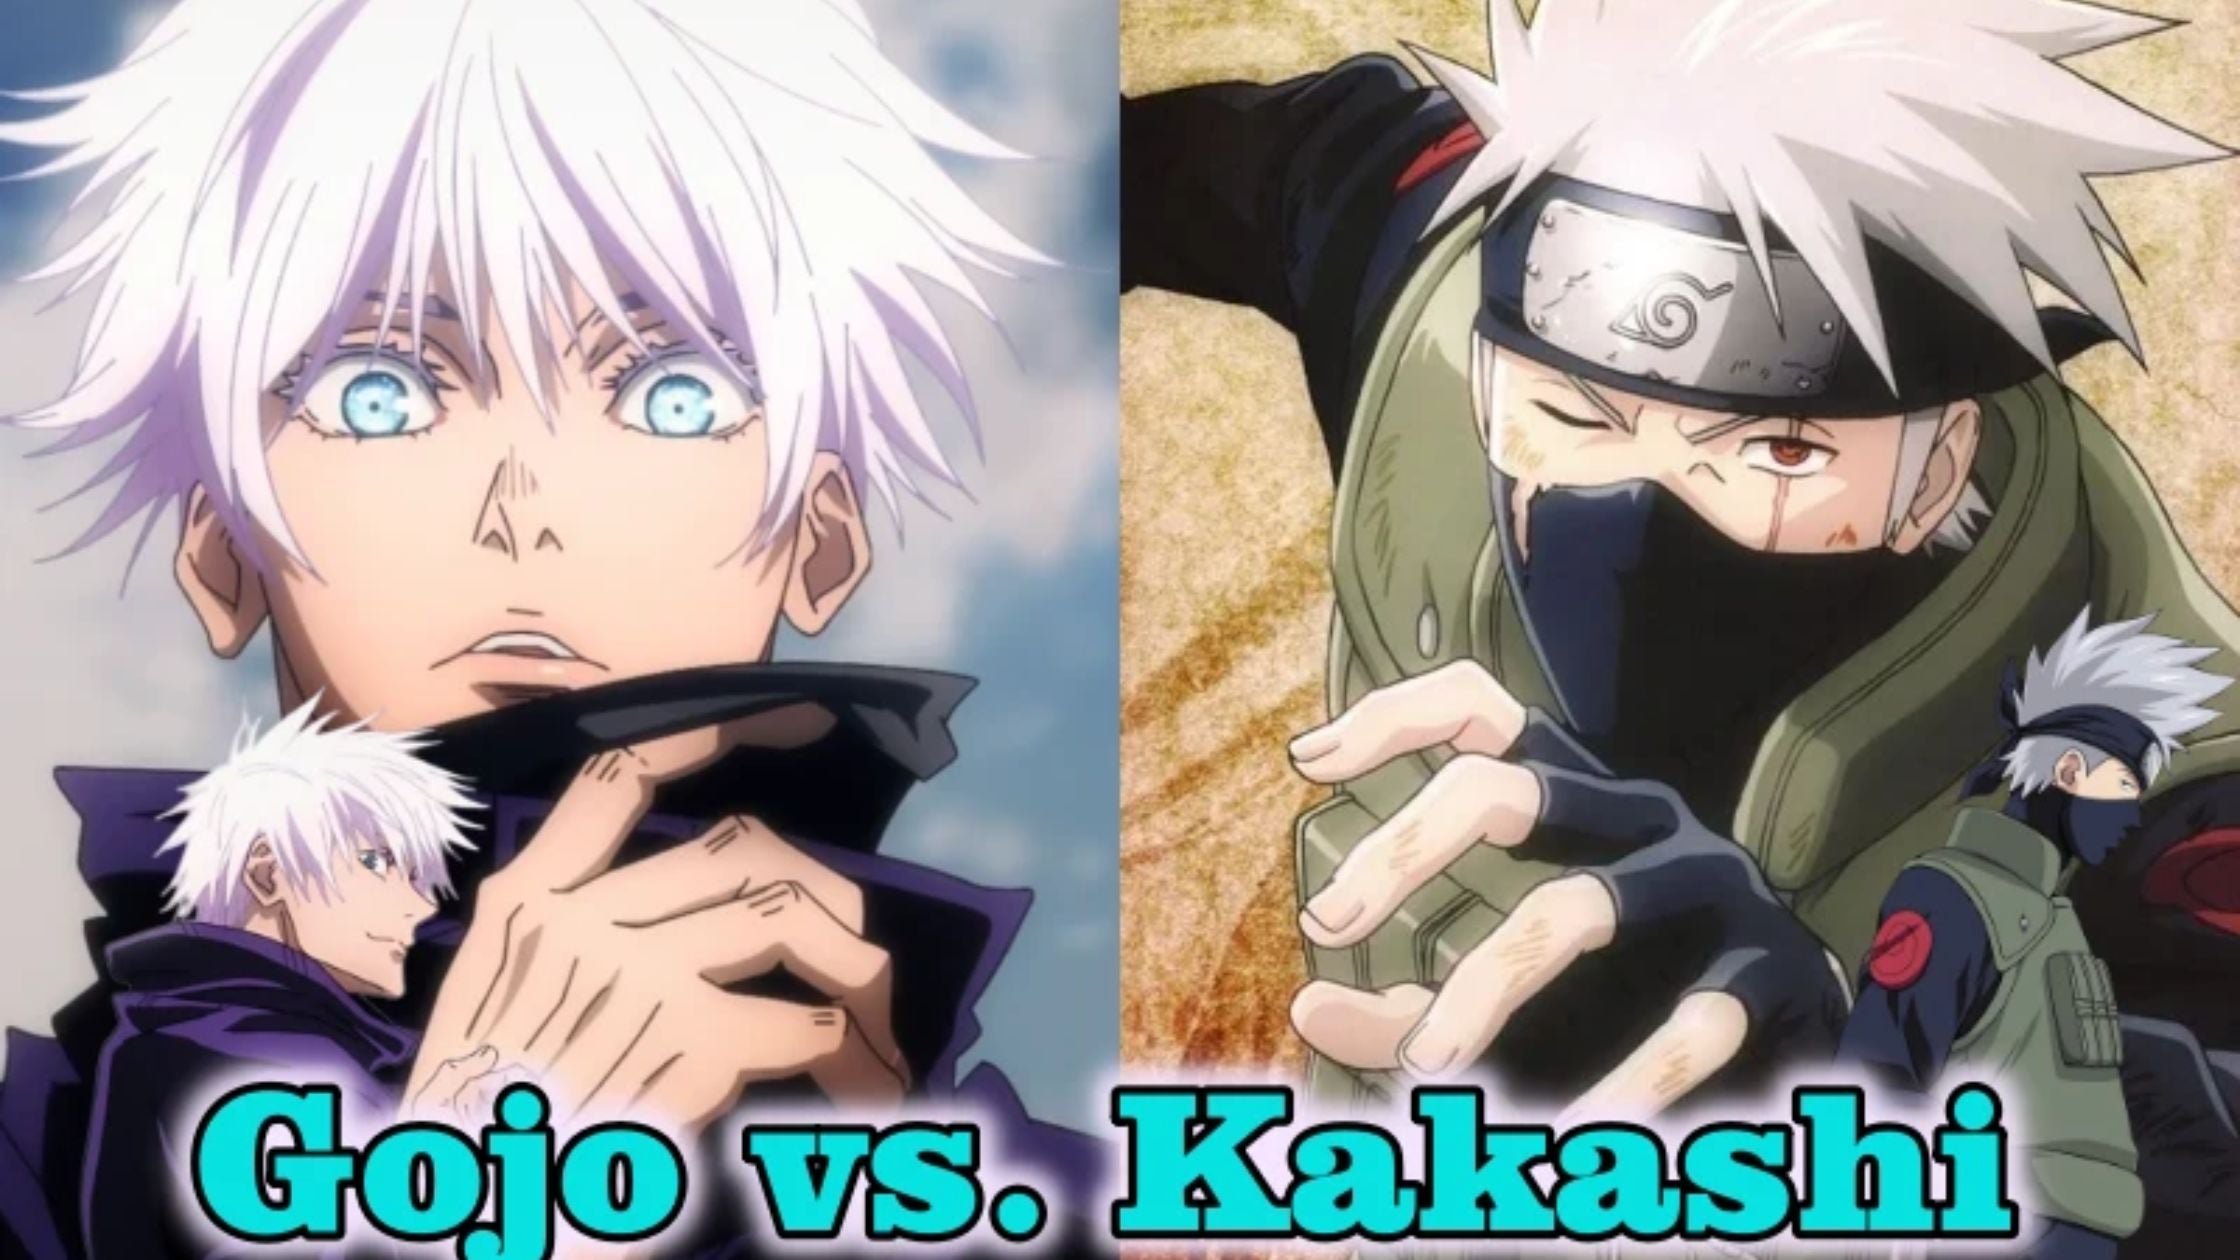 Gojo contre Kakashi : qui va gagner et pourquoi ?